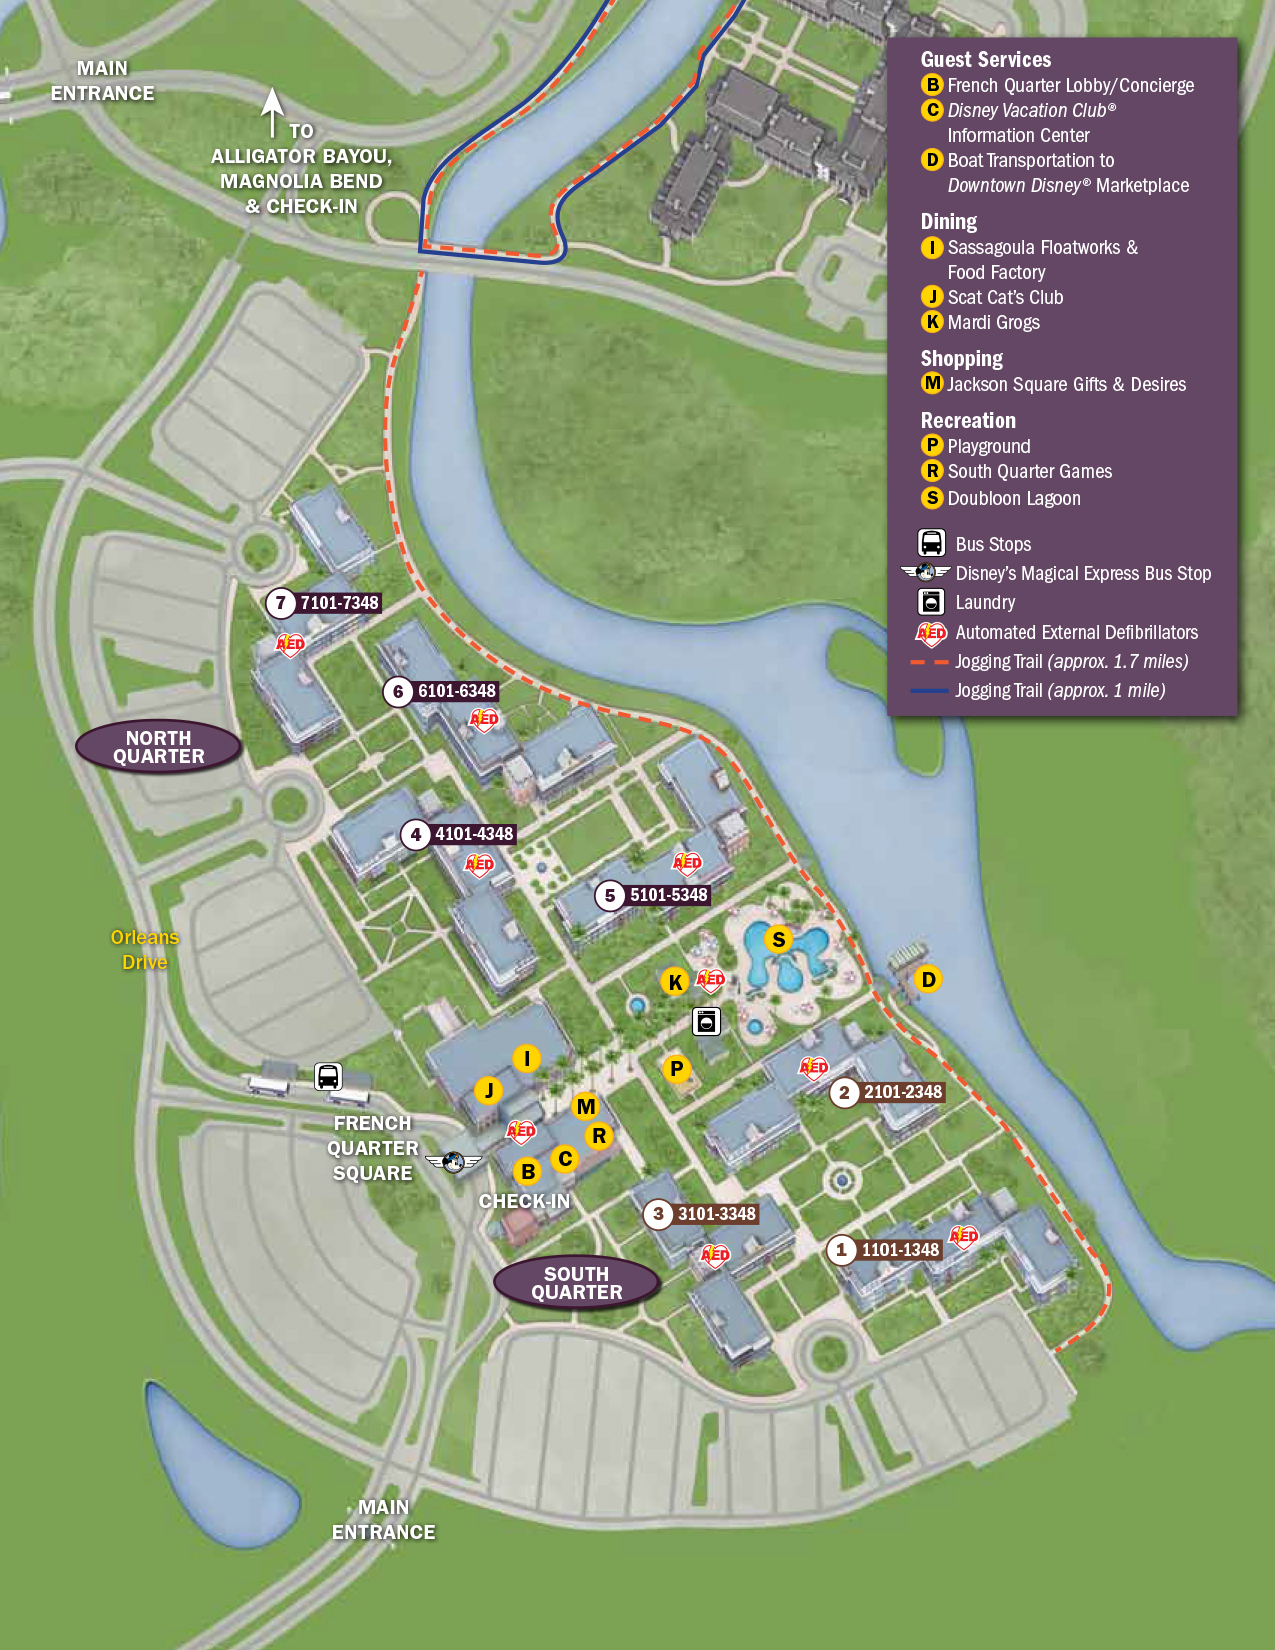 Port Orleans French Quarter Resort Map Walt Disney World